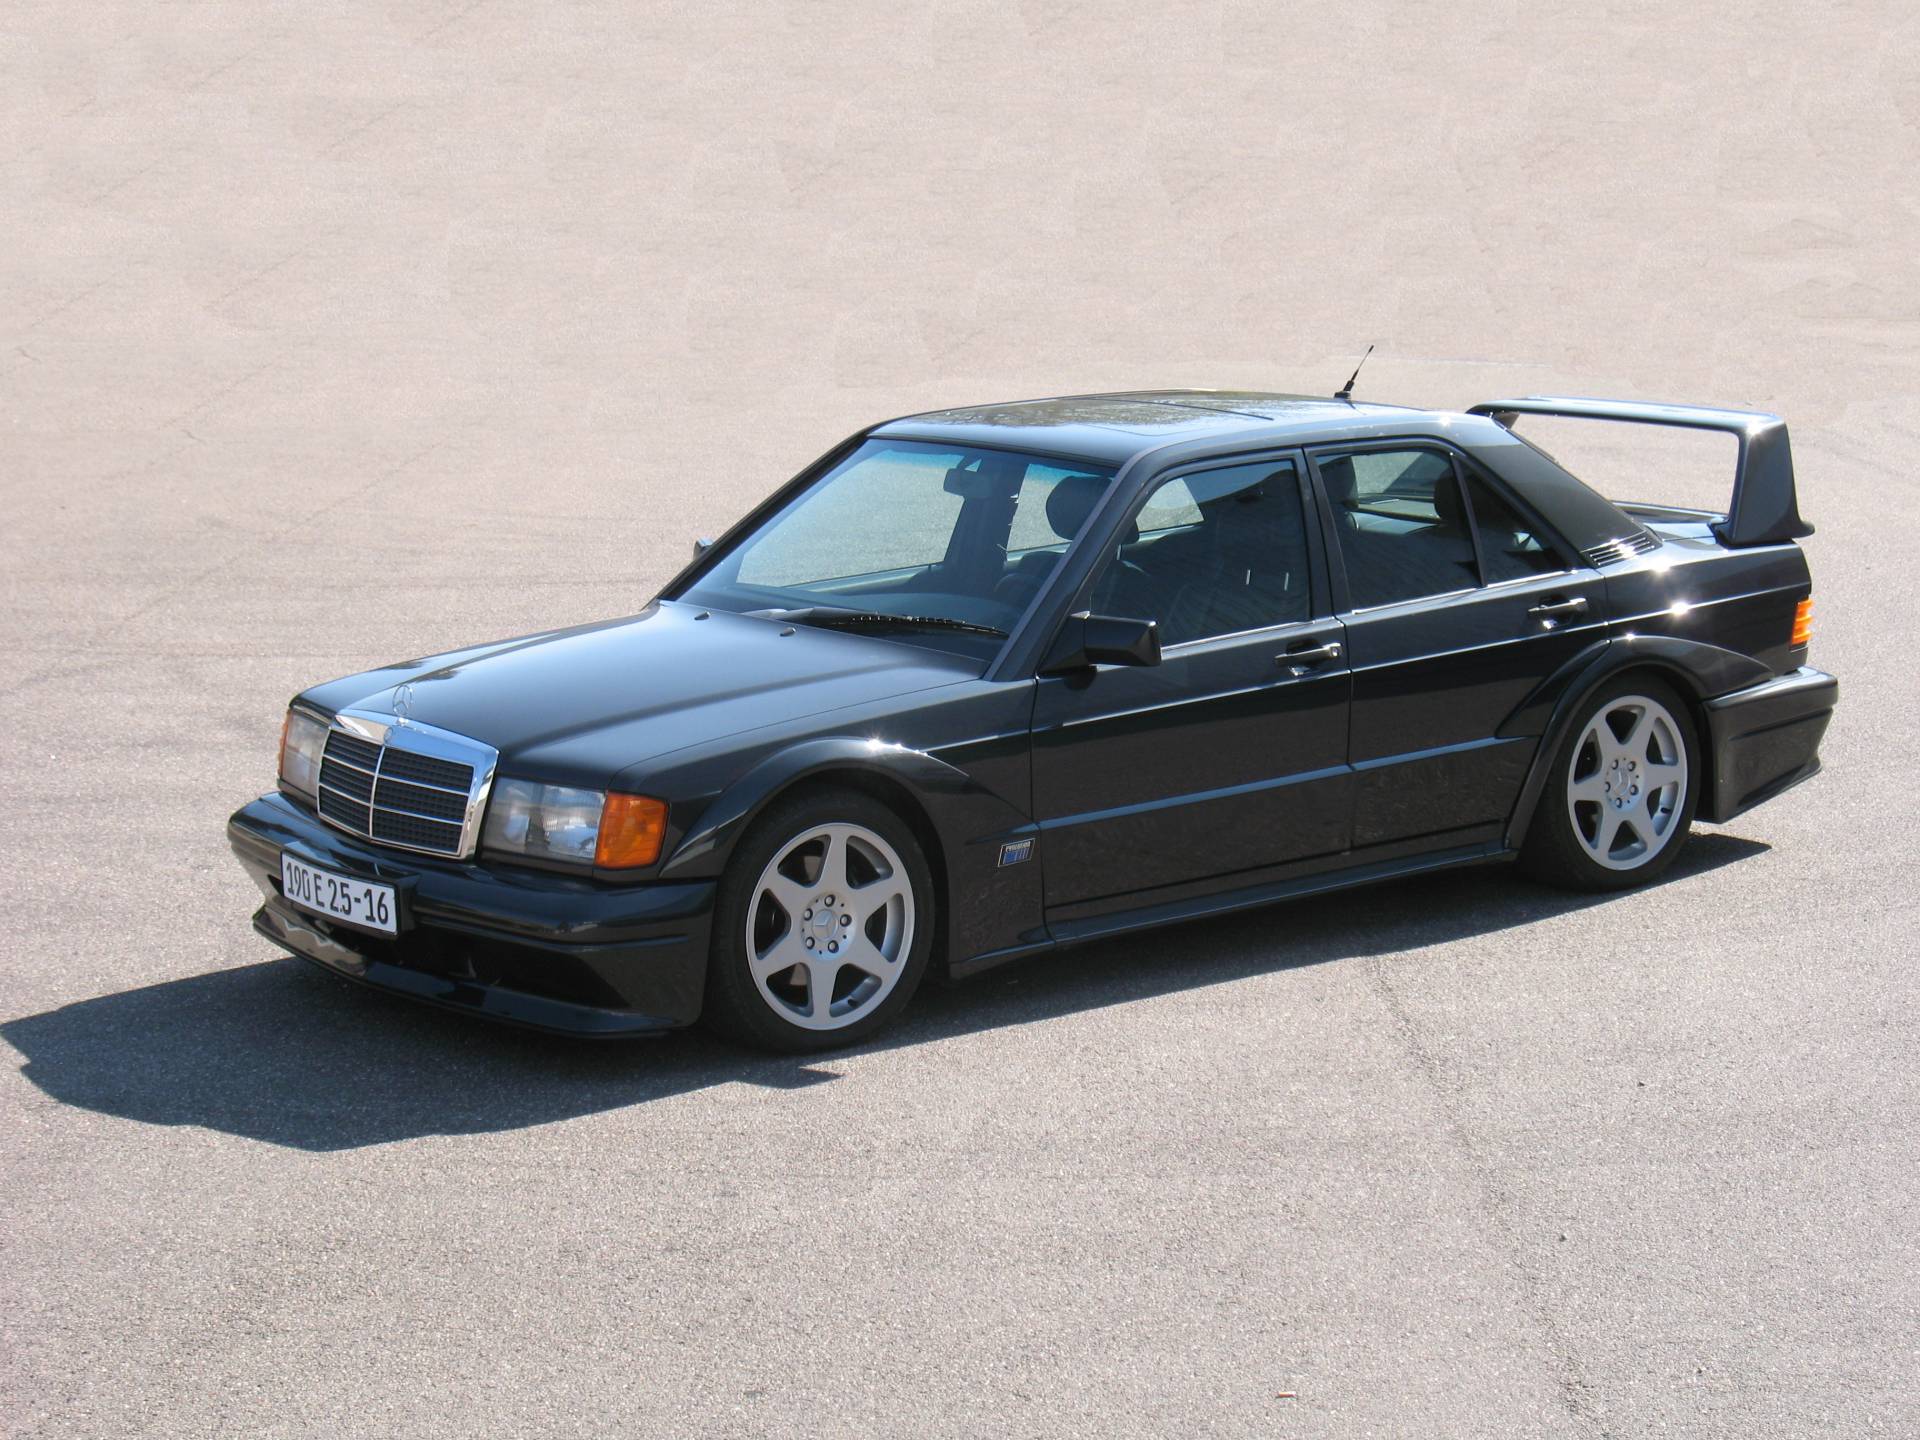 Mercedes-Benz 190 E 2.5-16 Evolution II (1990) for Sale - Classic Trader